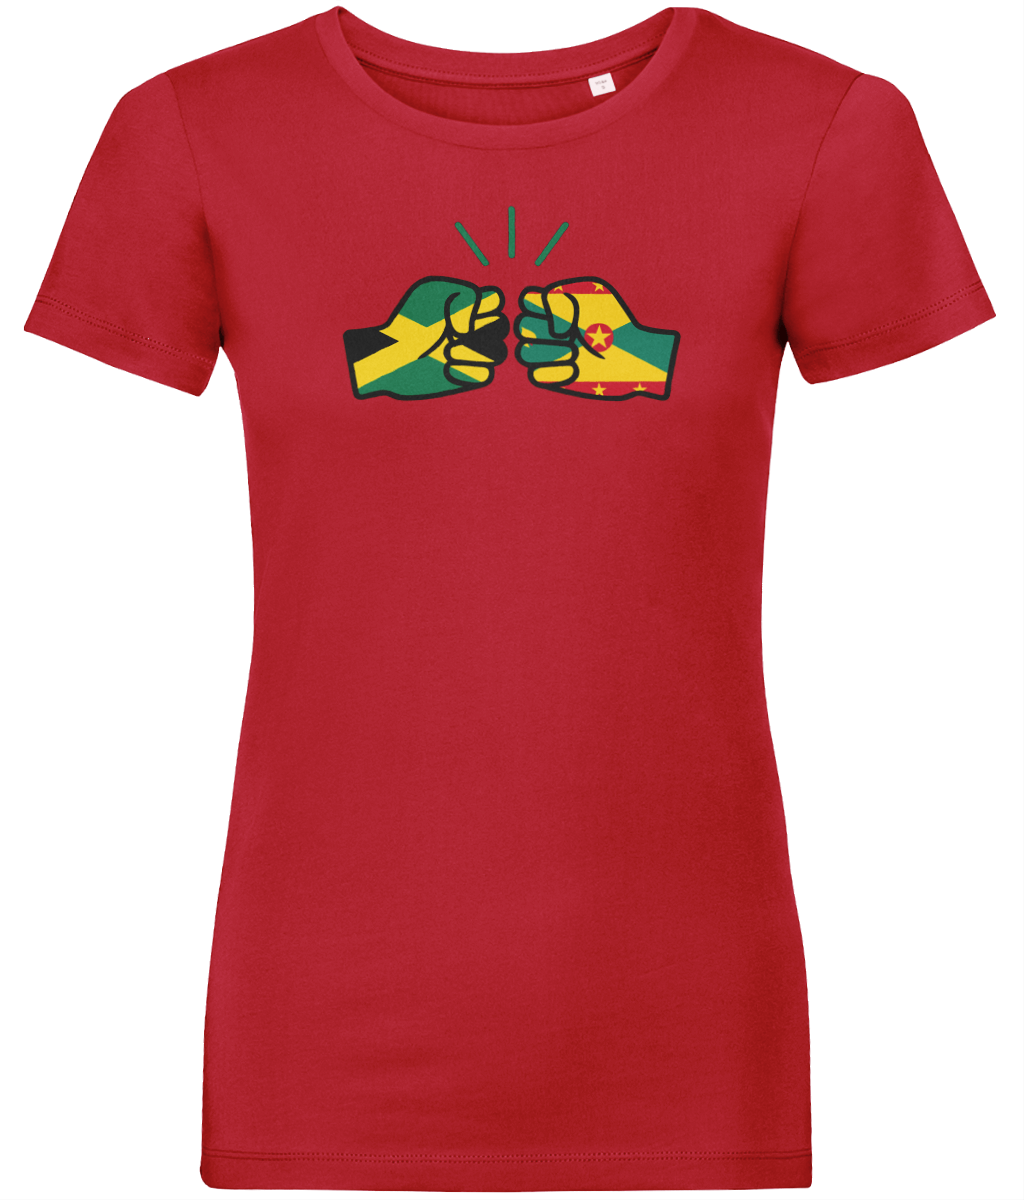 We Run Tings, Jamaica & Grenada, Dual Parentage, Women's, Organic Ring Spun Cotton T-Shirt, Outline